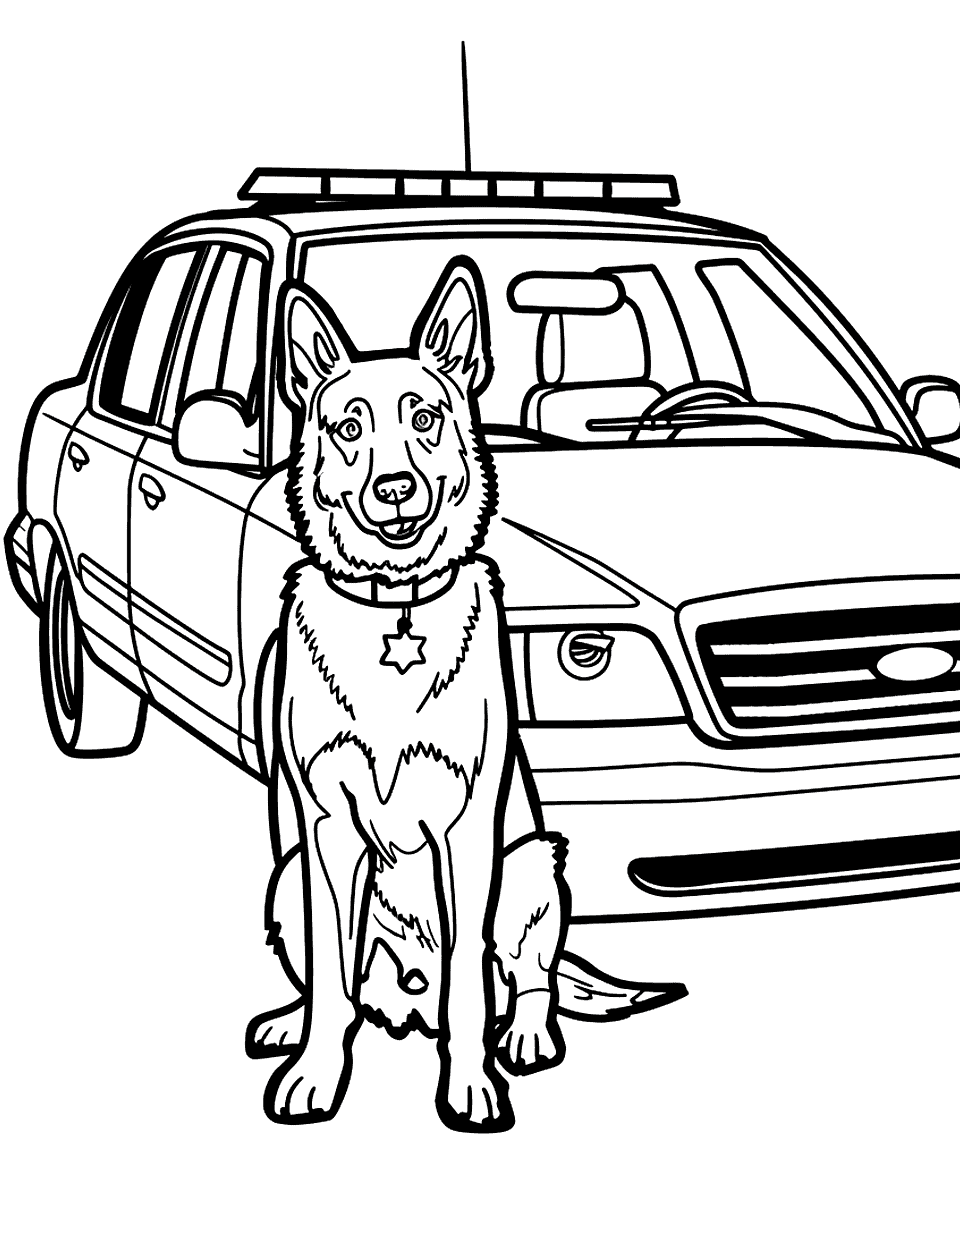 Police Dog on Duty Car Coloring Page - A police dog sitting alert near a patrol car.